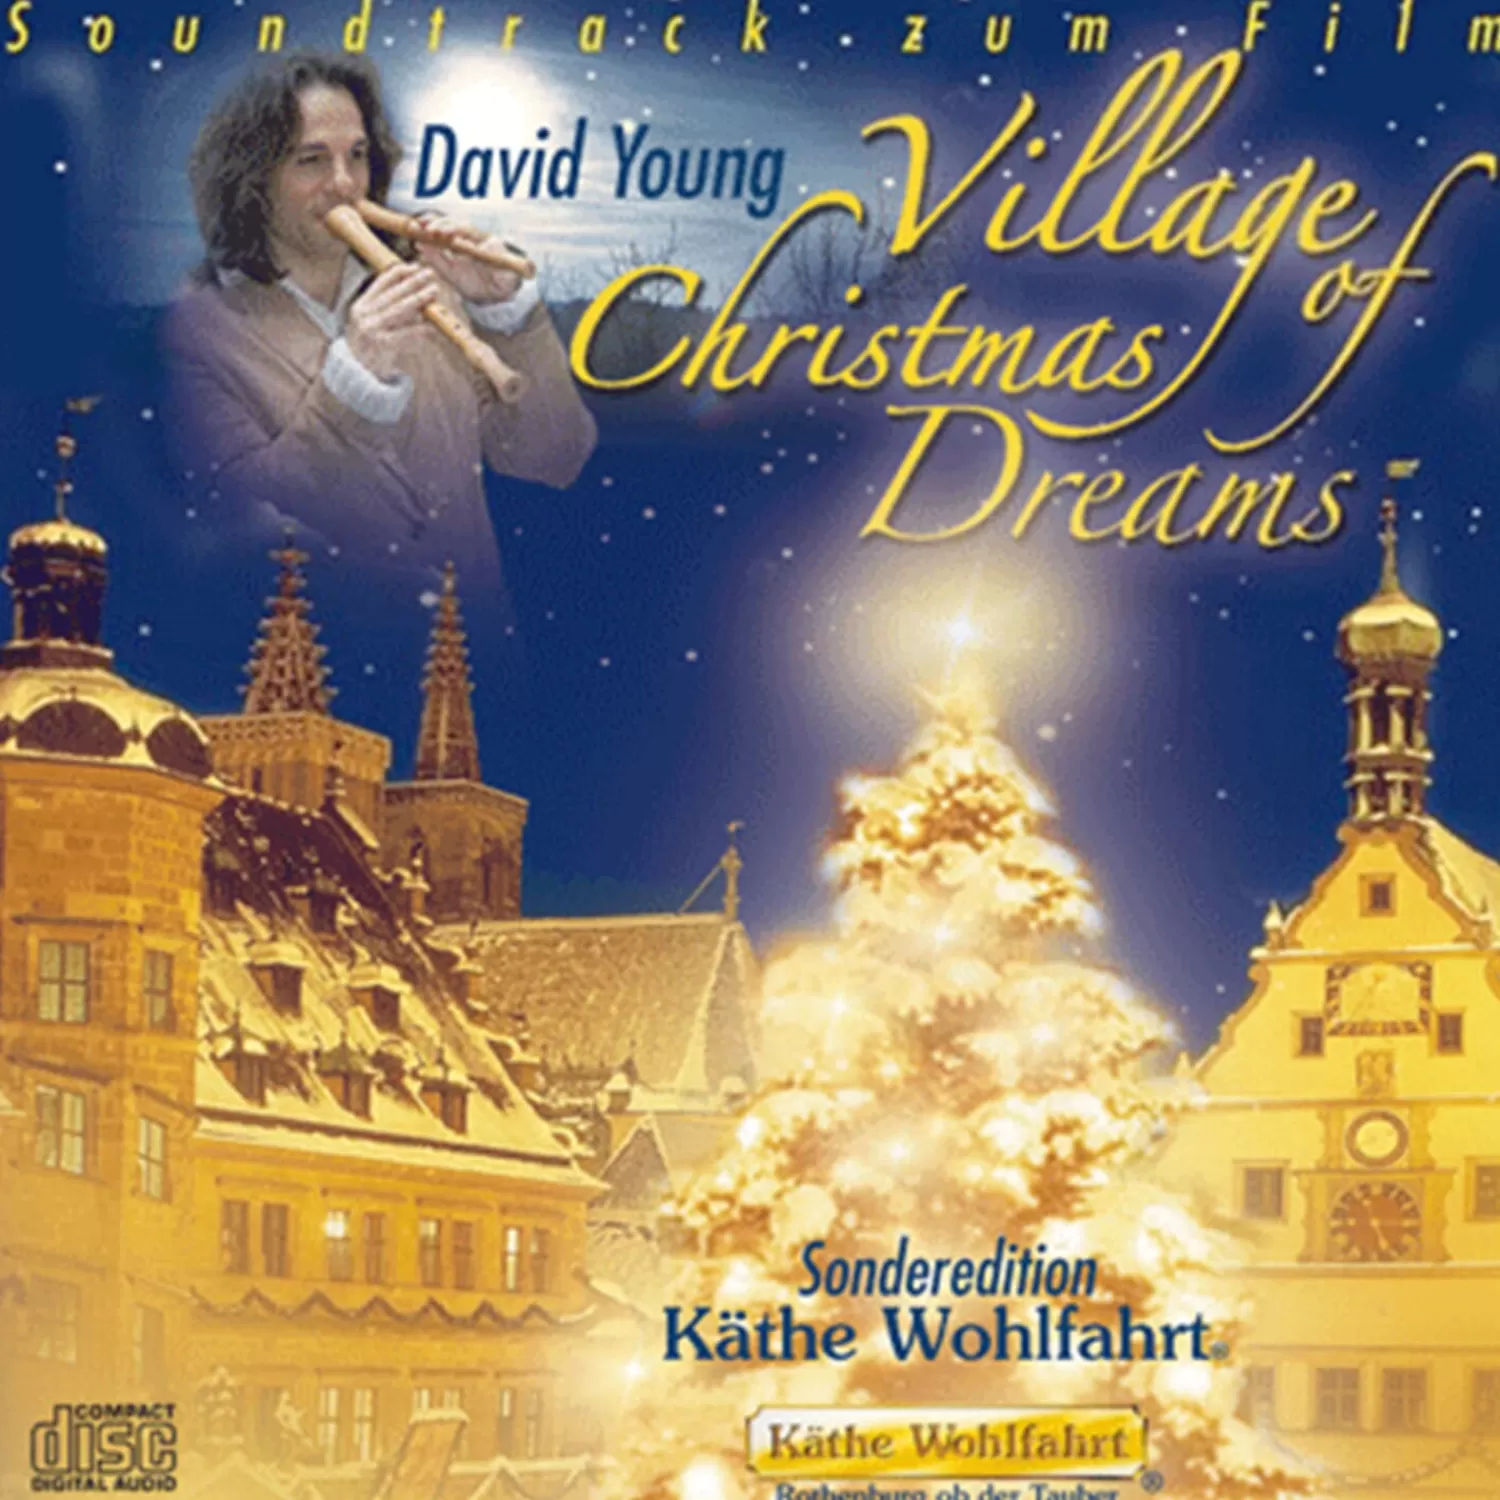 Käthe Wohlfahrt Multimedia<Cd "Village Of Christmas Dreams"